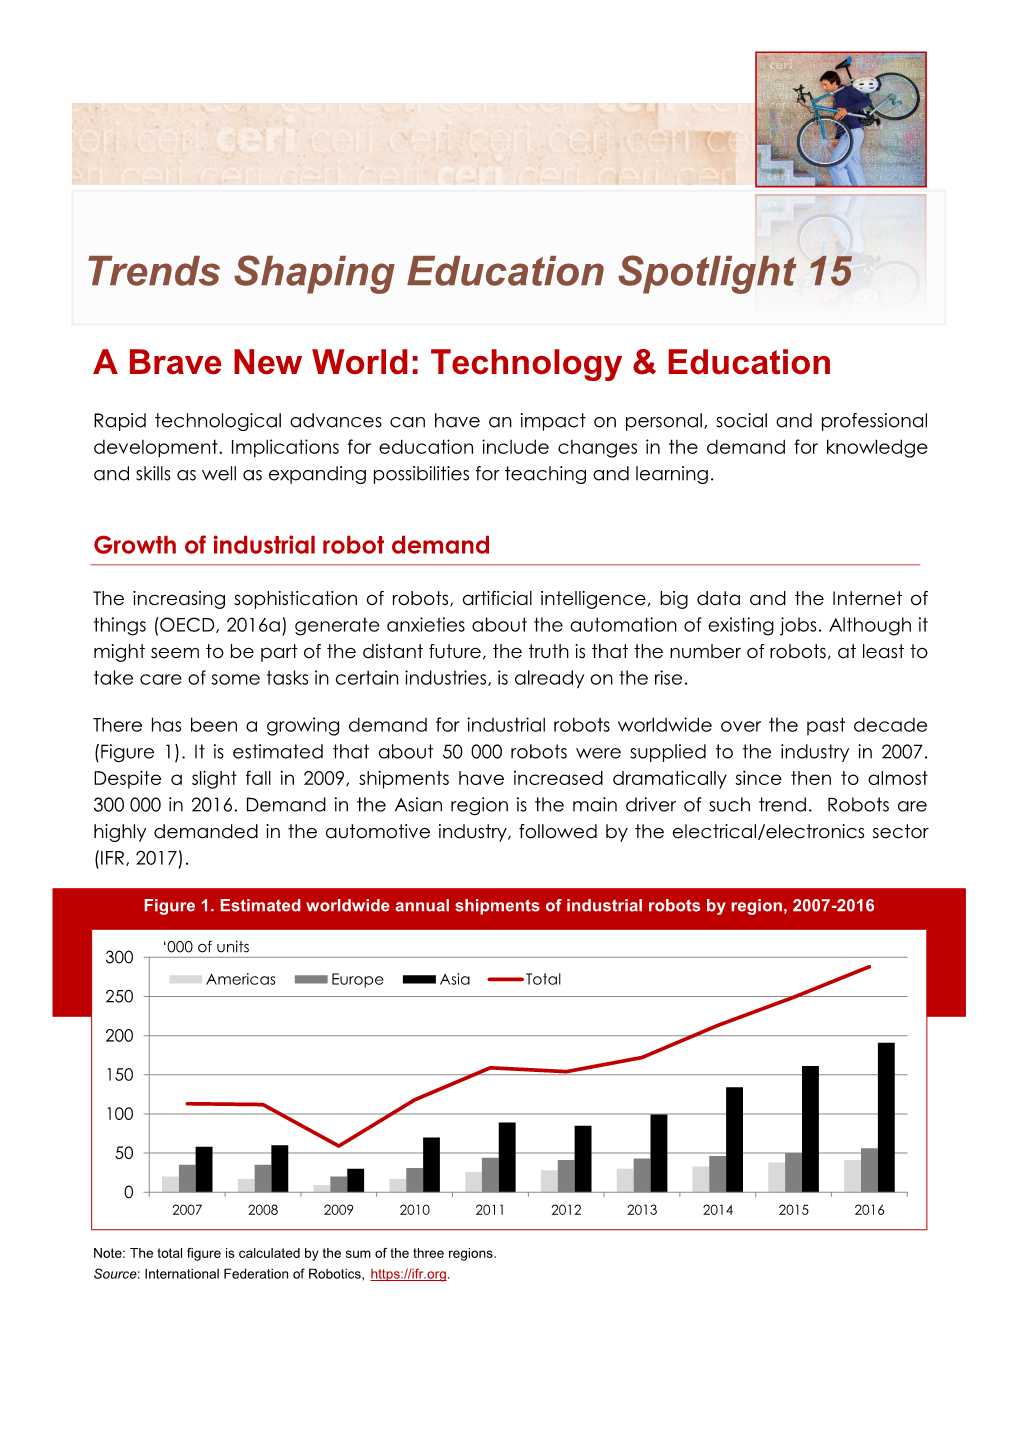 A Brave New World: Technology & Education